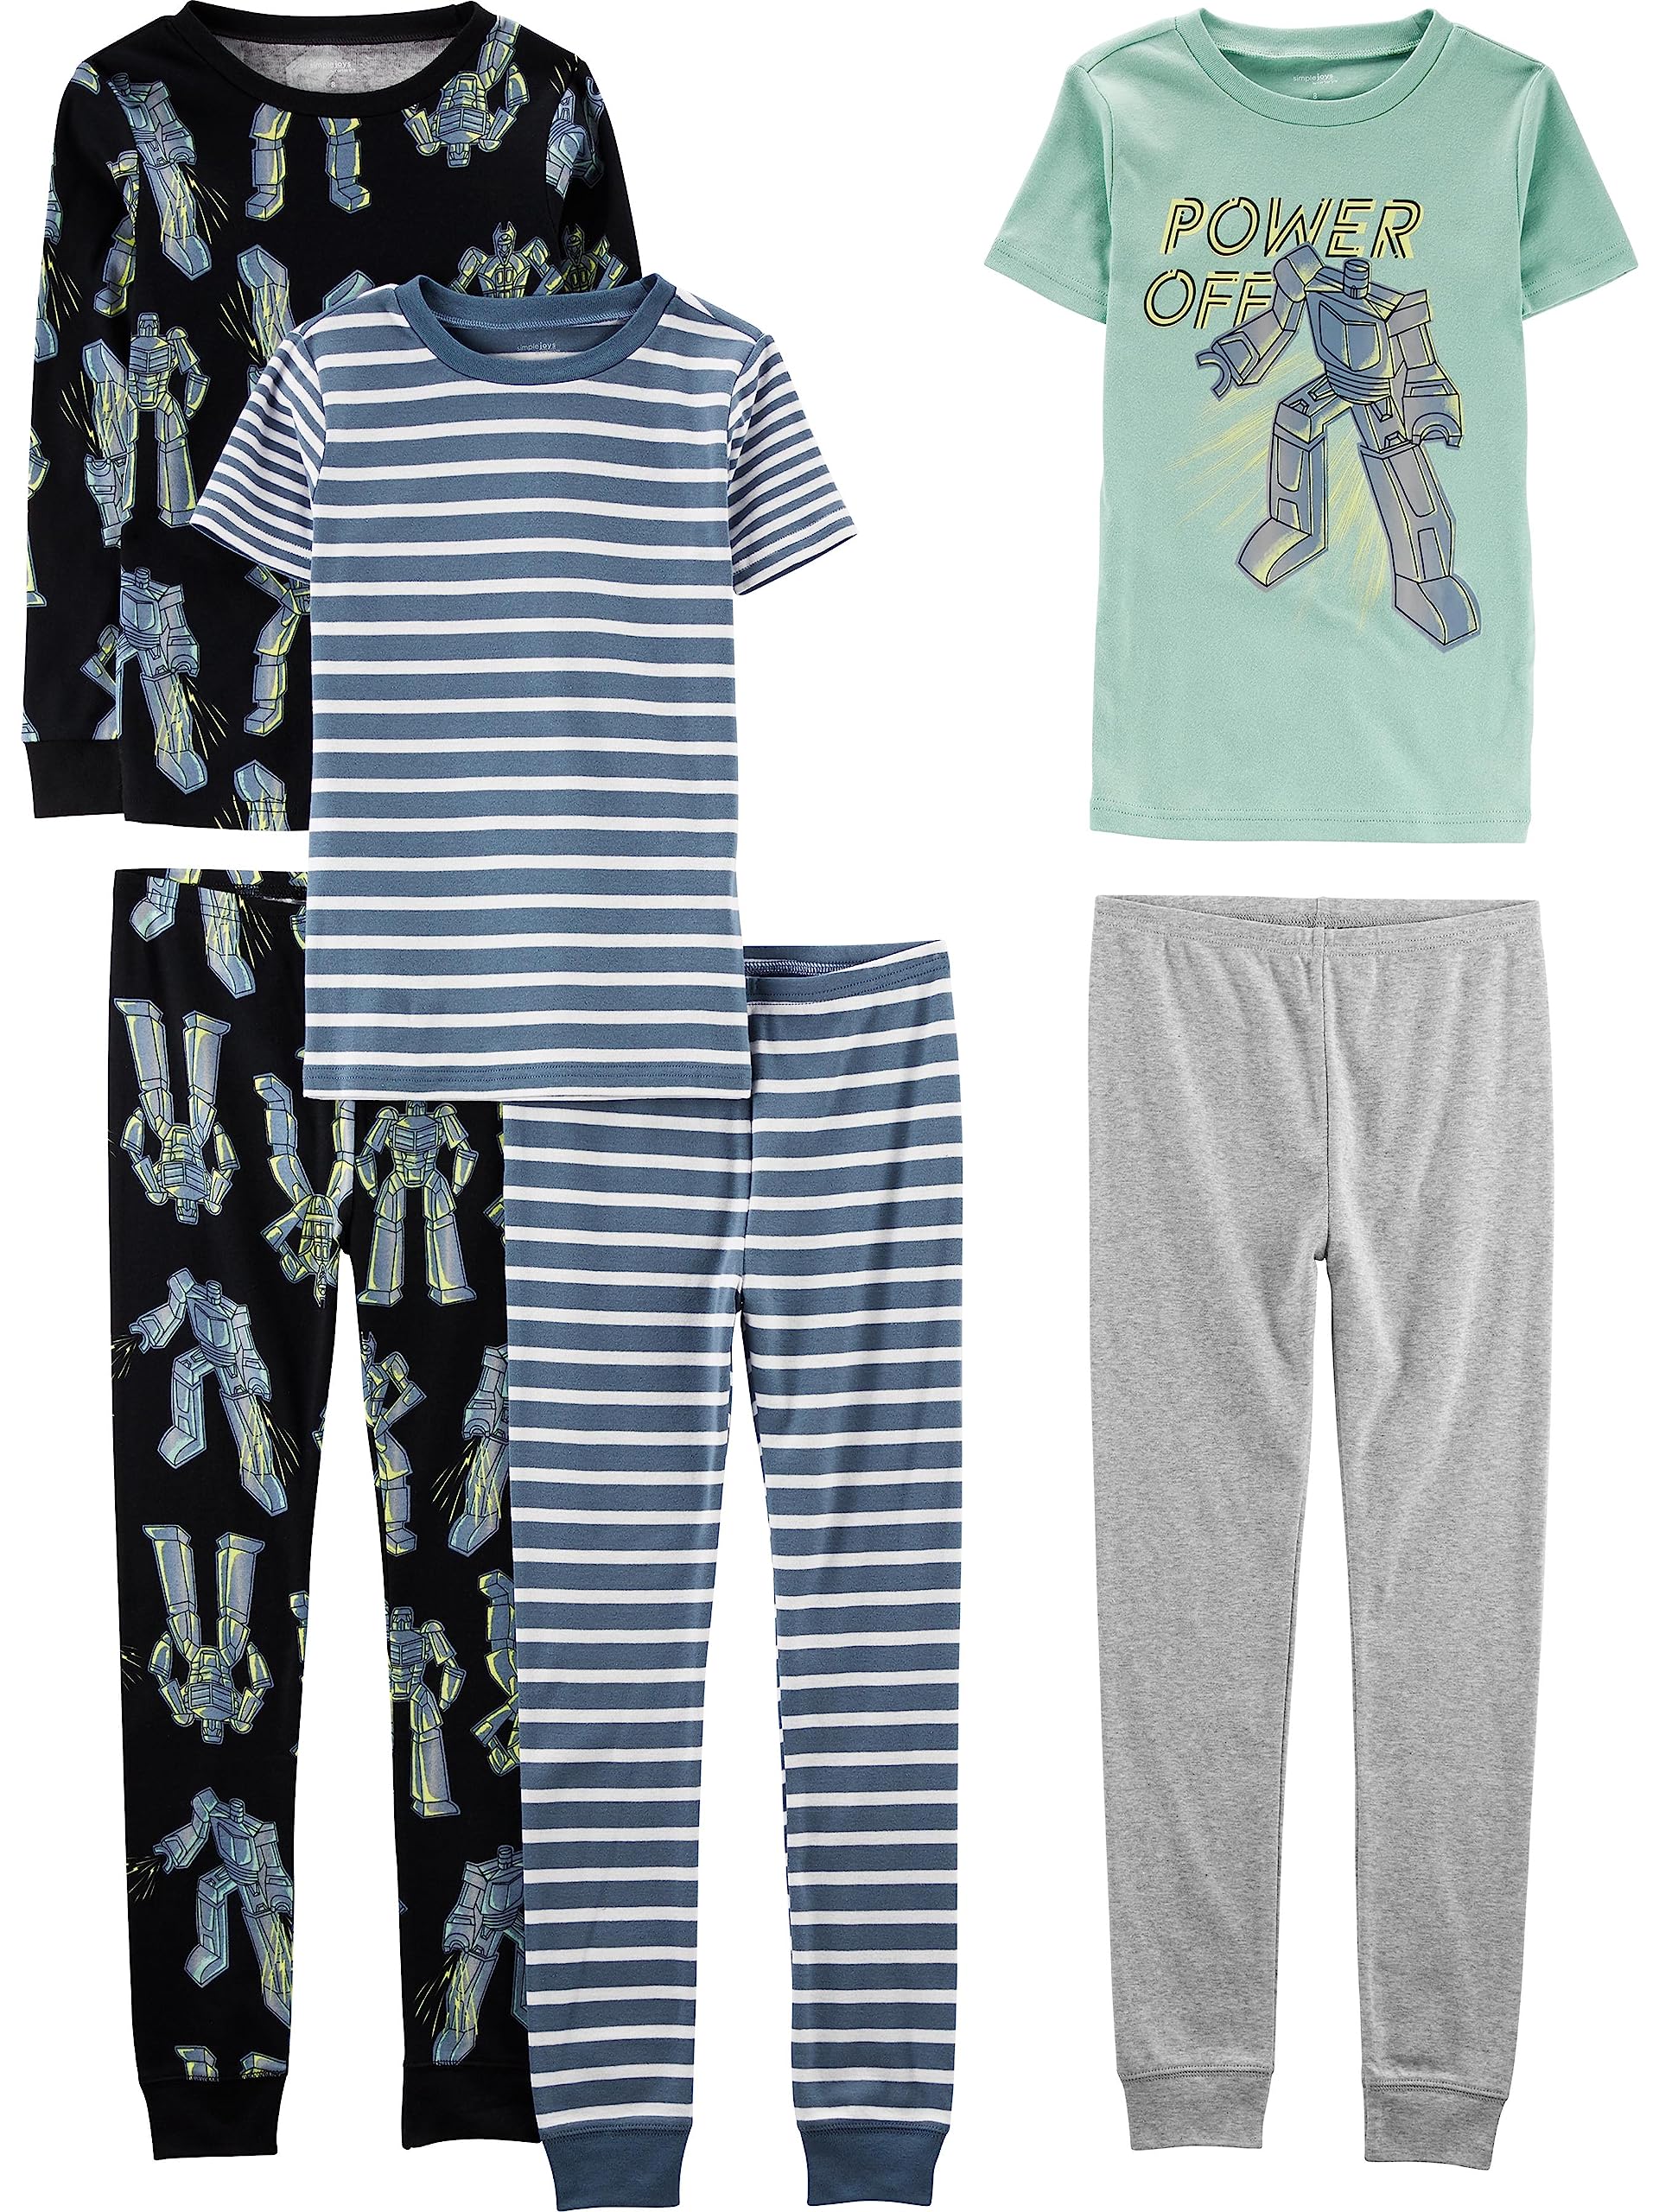 Simple Joys by Carter's Boys' 6-Piece Snug-fit Cotton Pajama Set